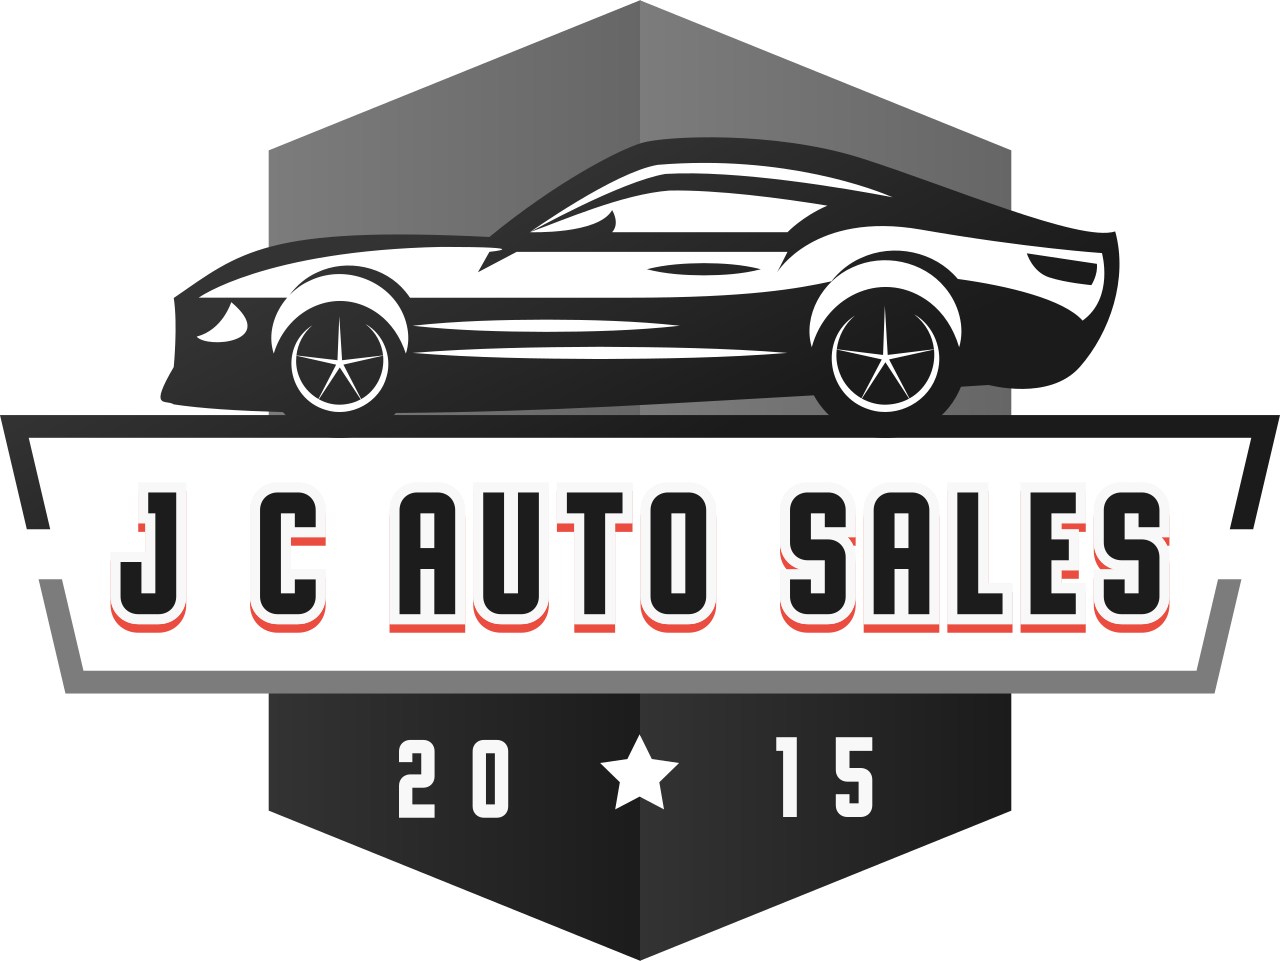 J C Auto Sales's logo